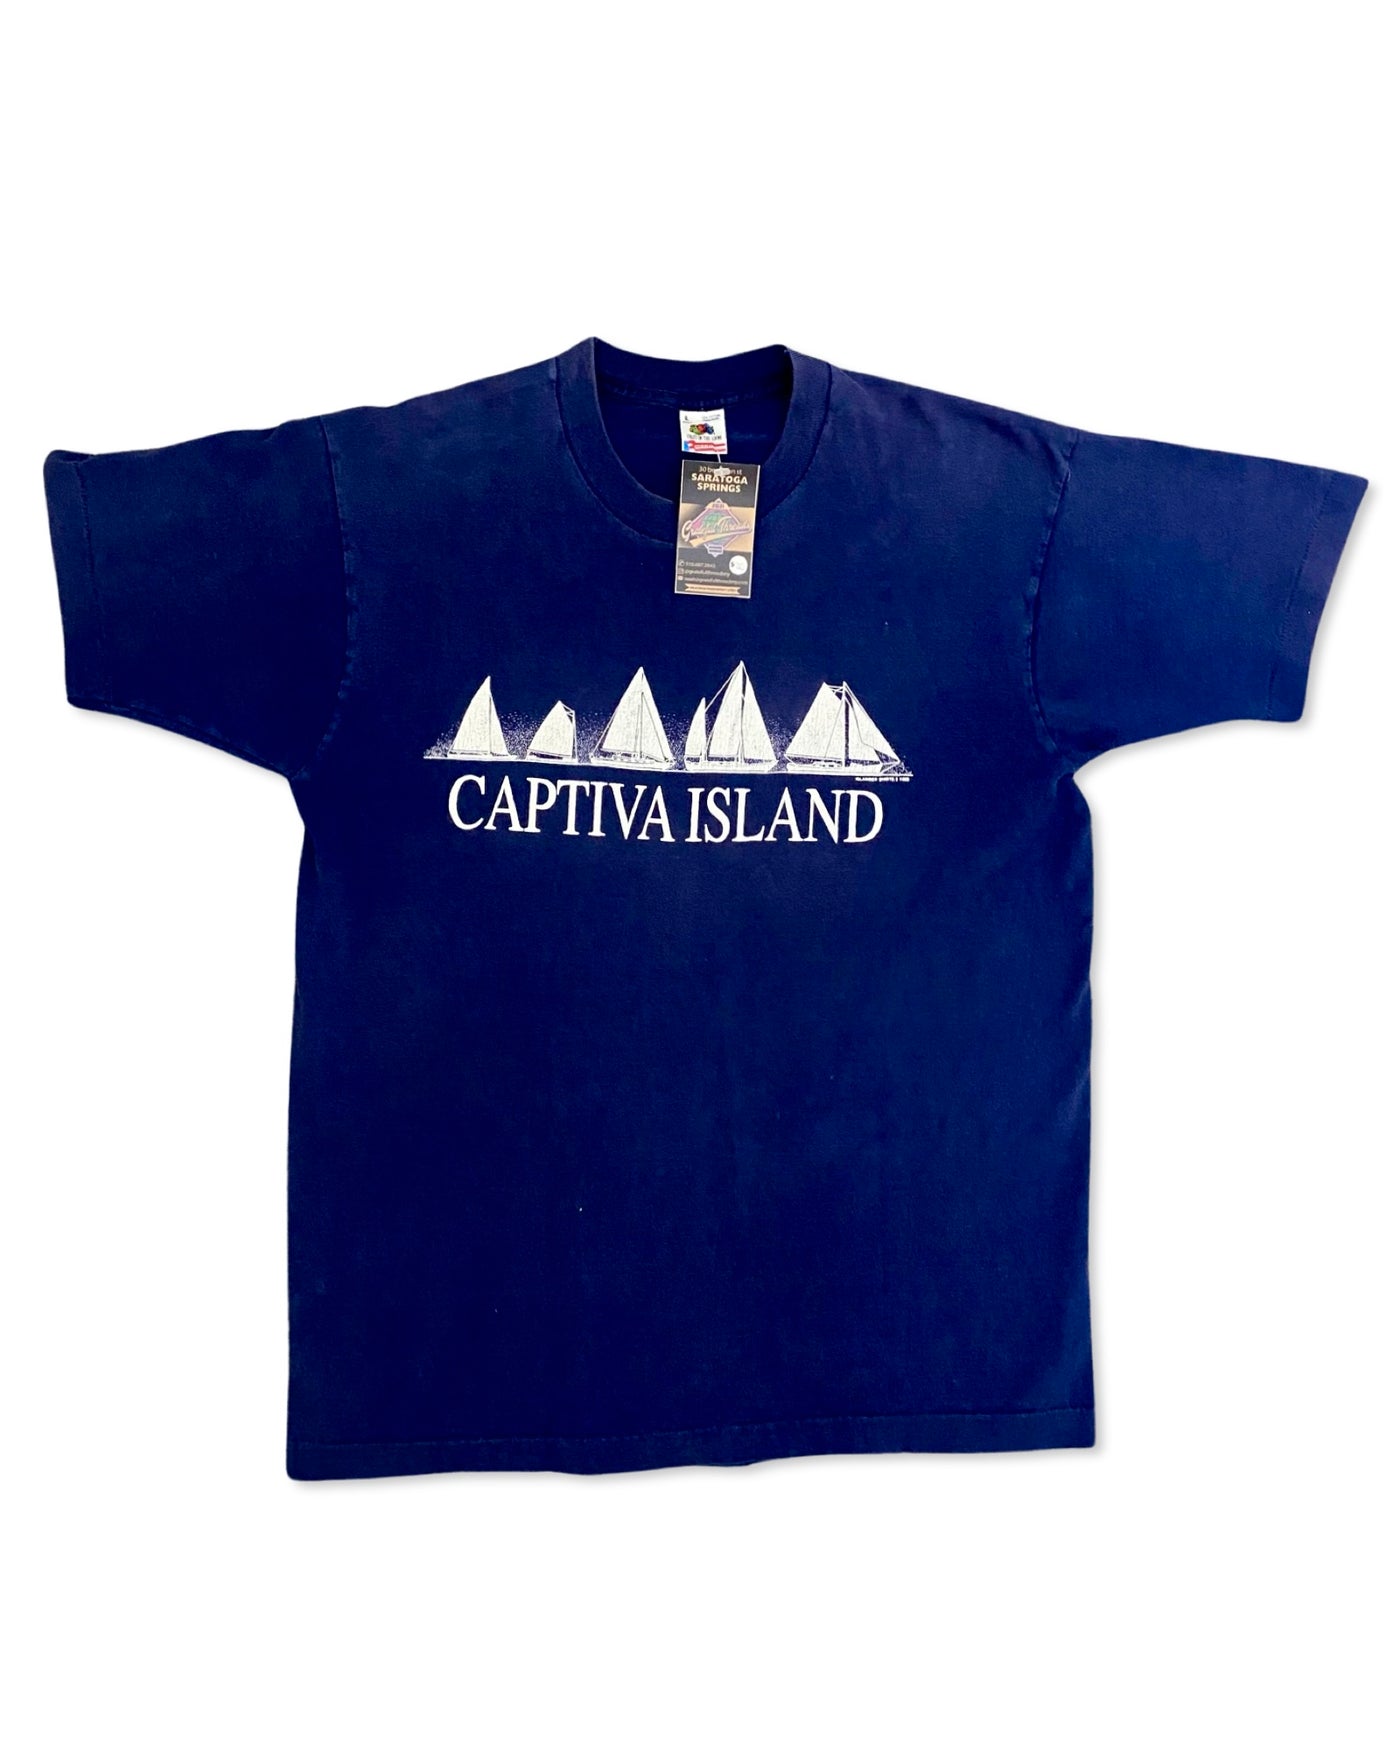 Vintage 1988 Captiva Island T-Shirt